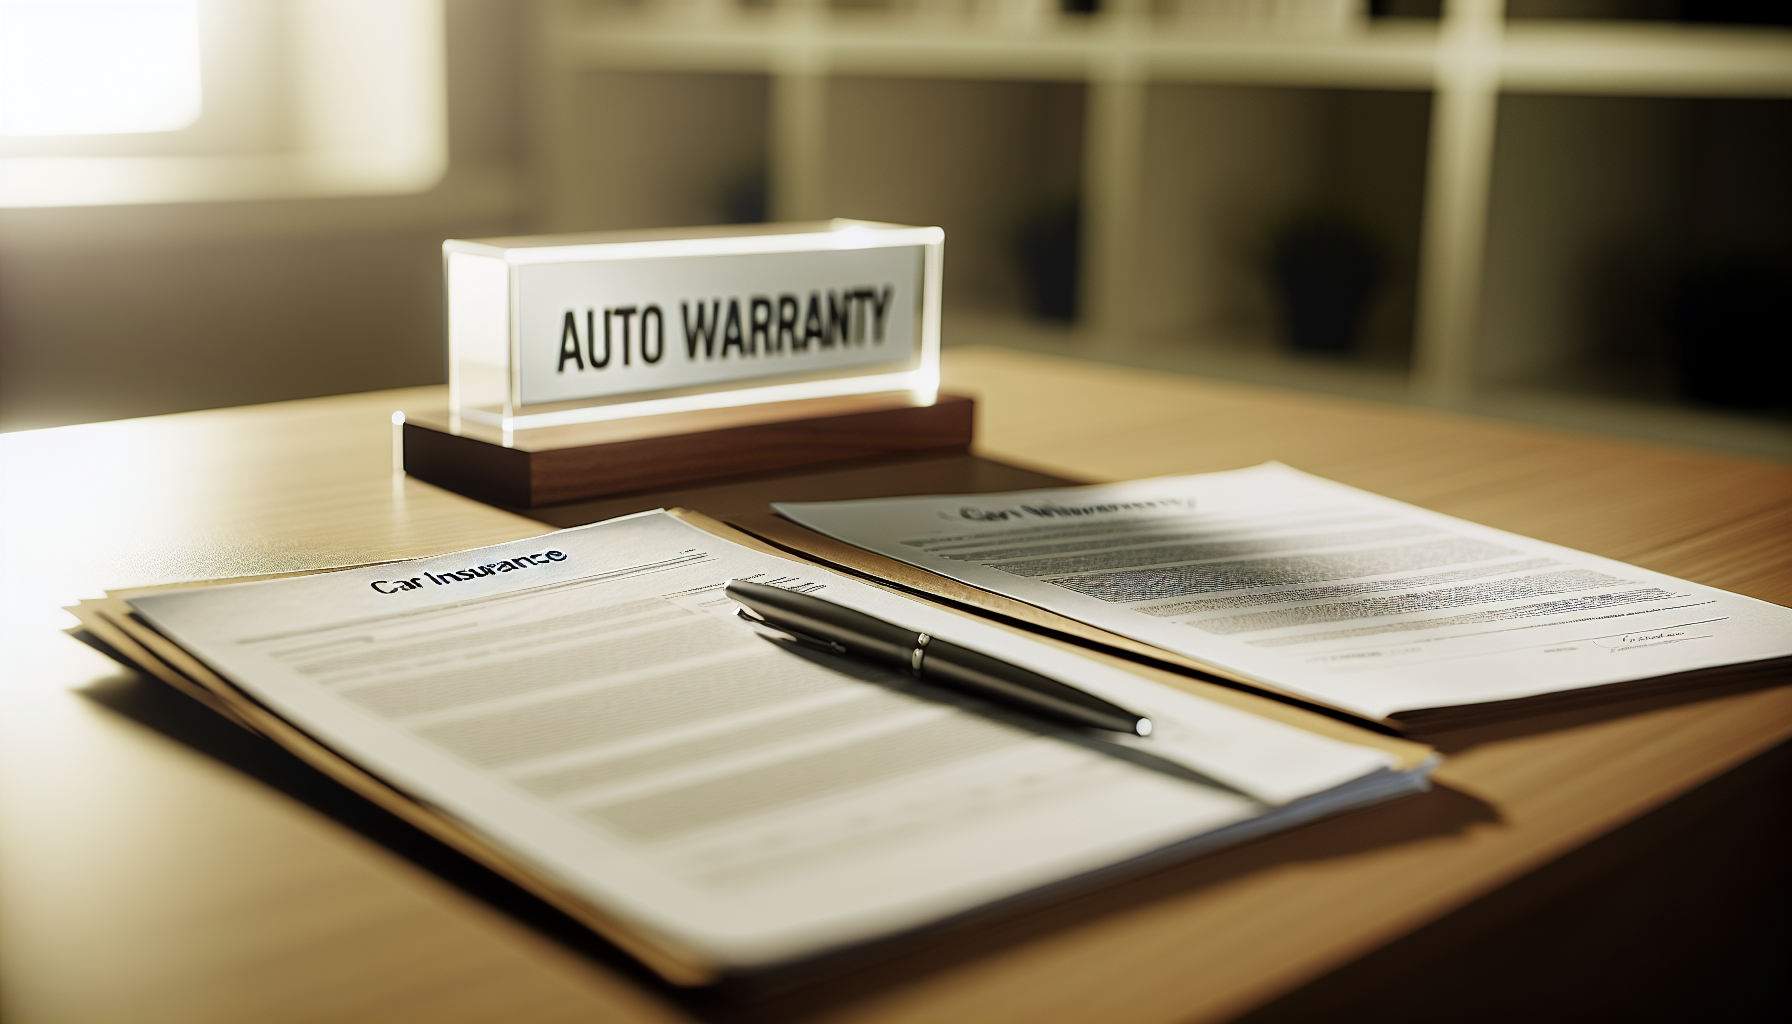 Car insurance and car warranty documents on a desk